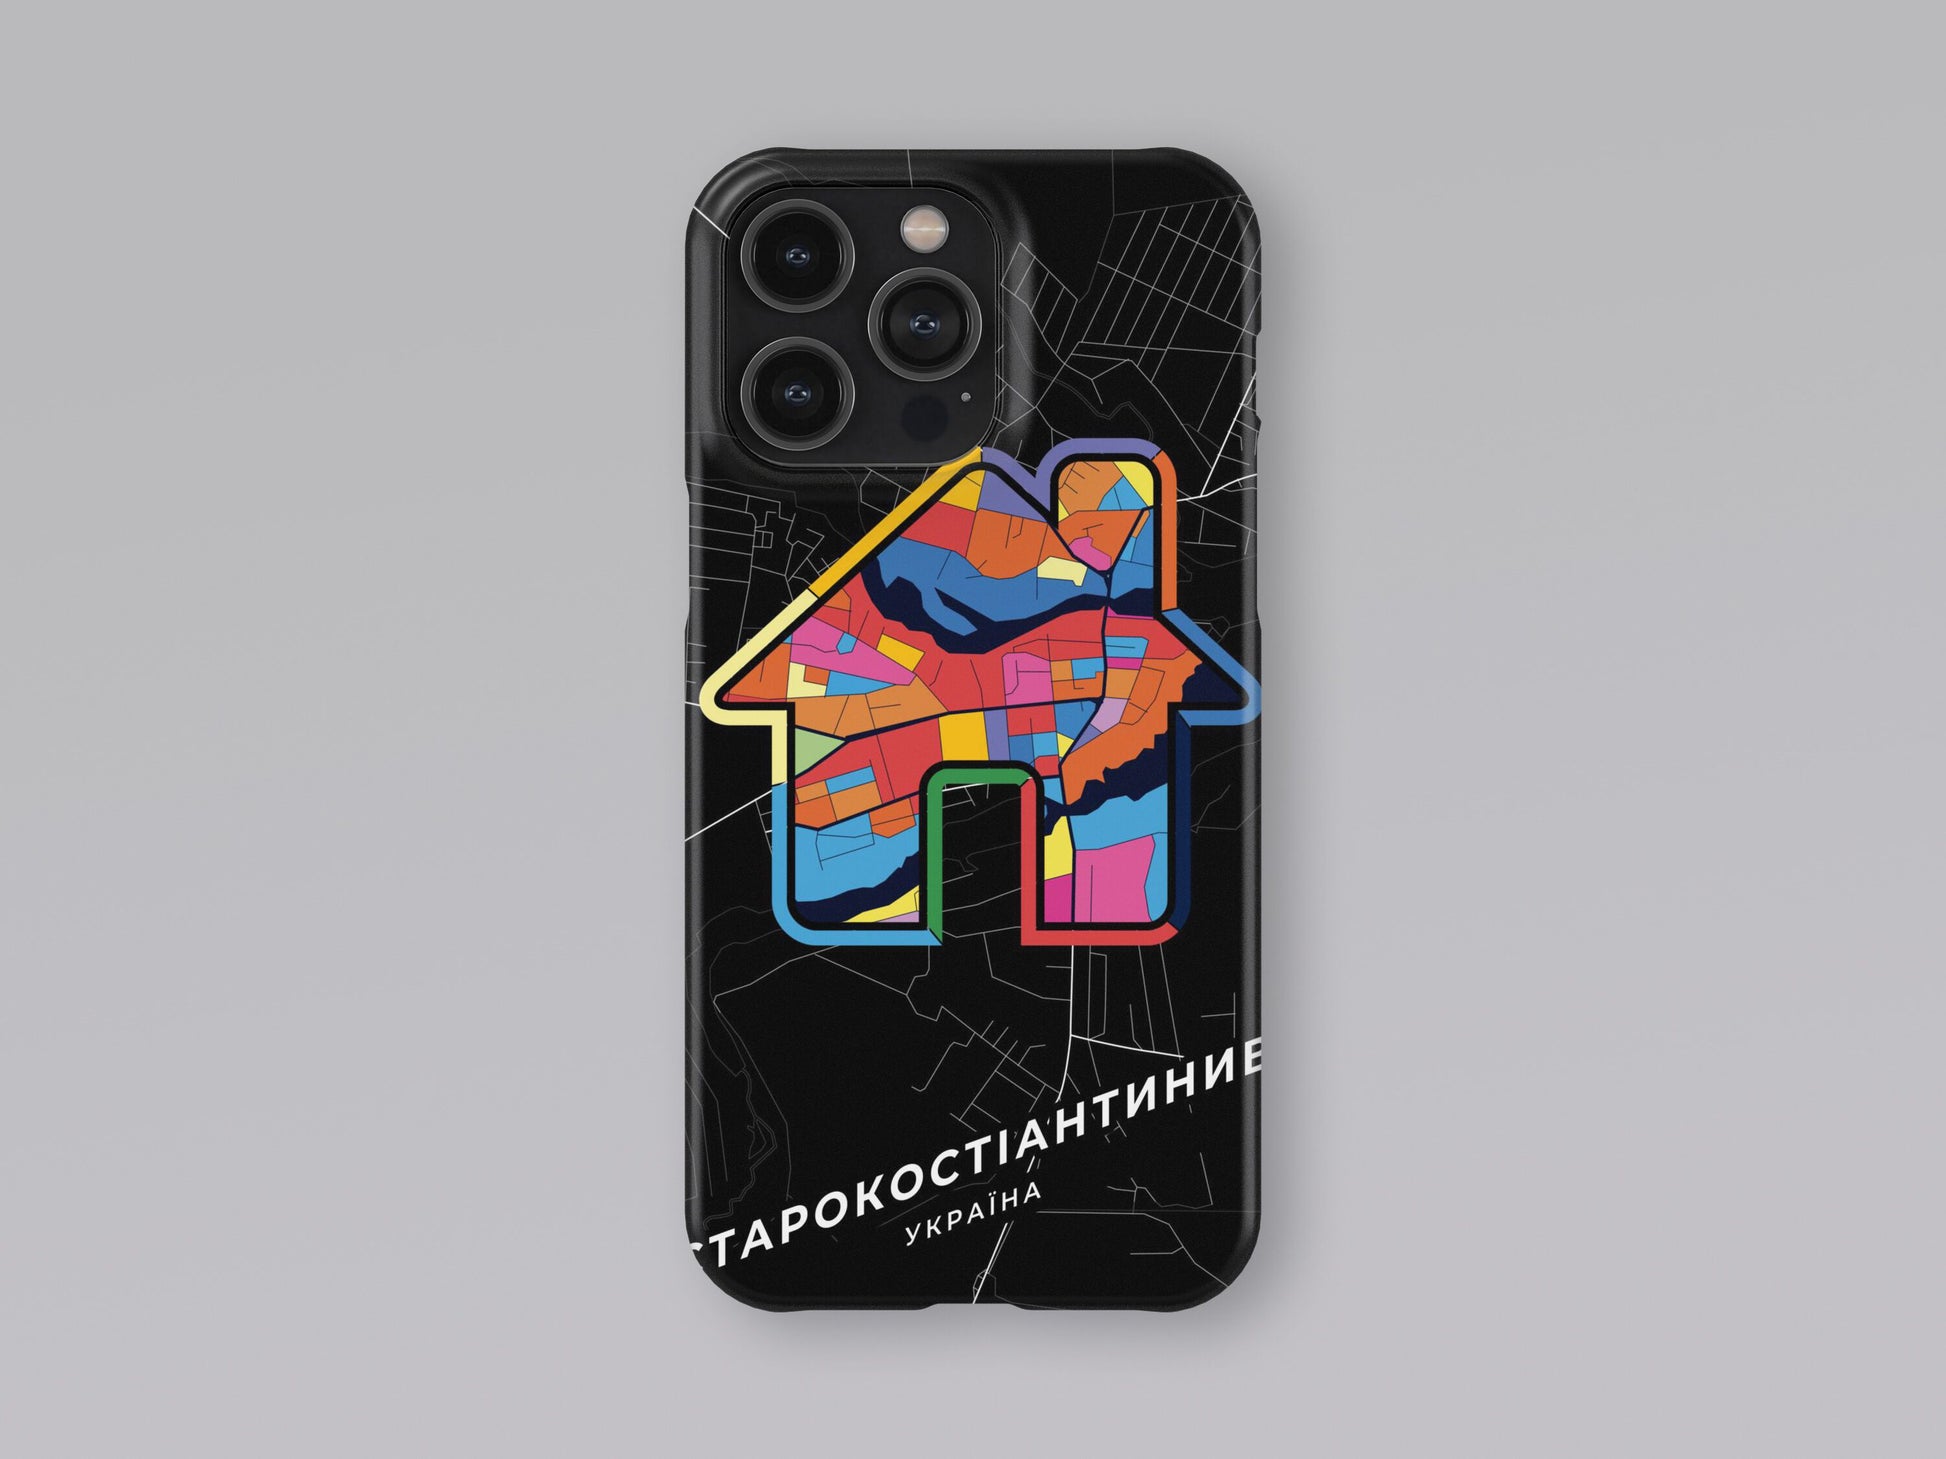 Starokostiantyniv Ukraine slim phone case with colorful icon 3